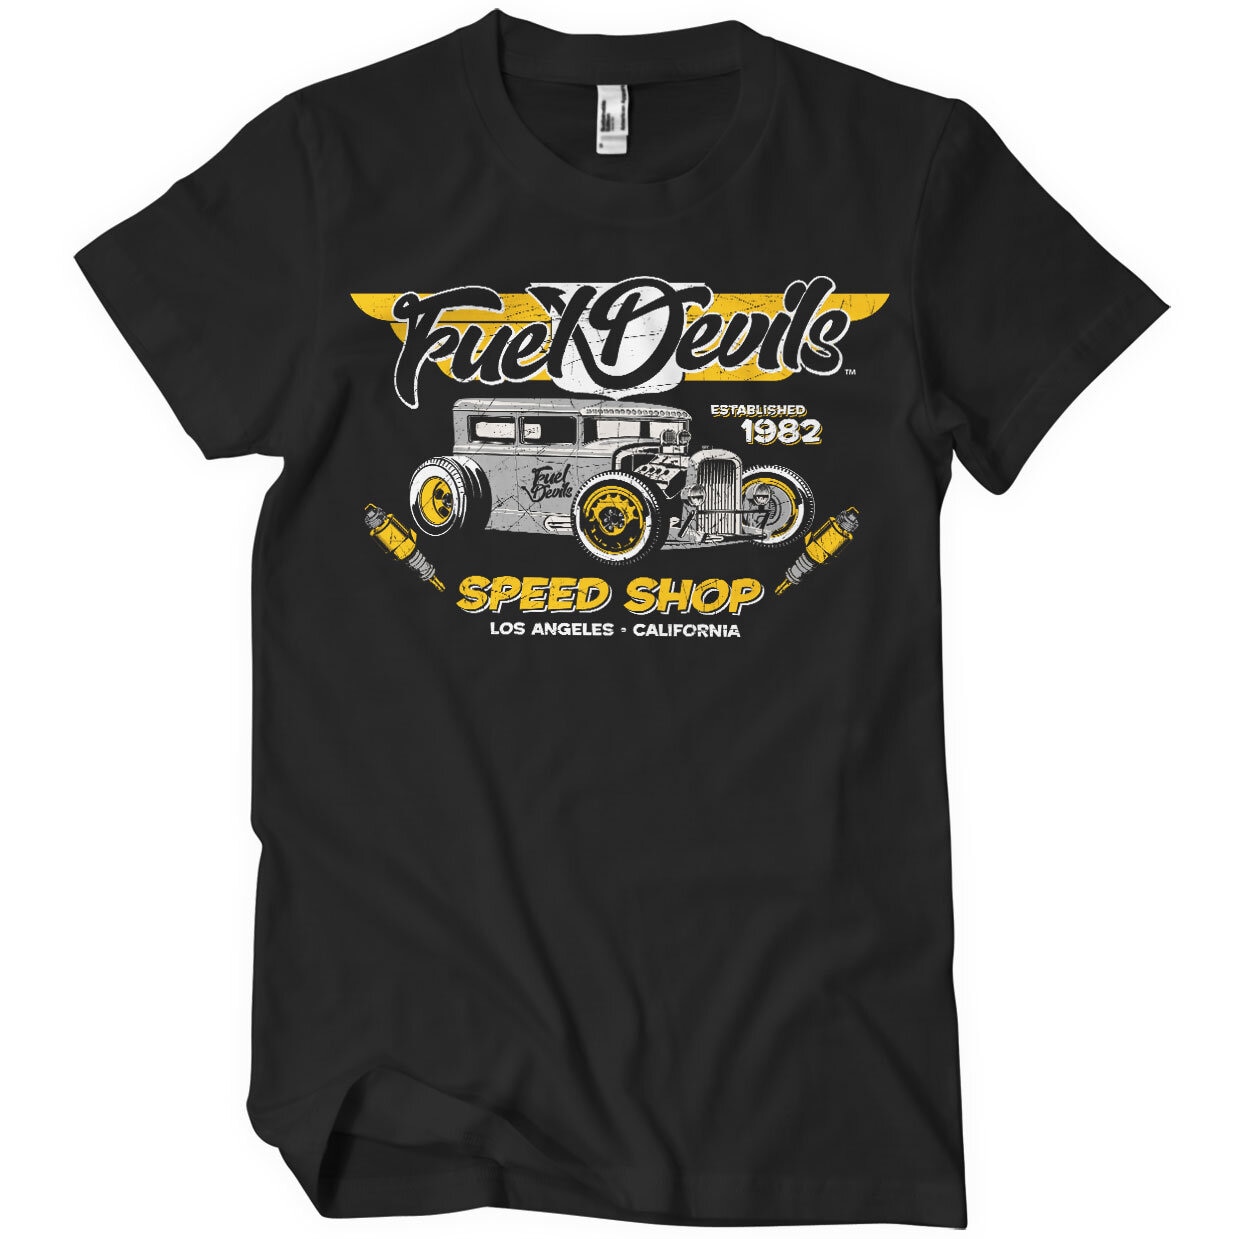 Fuel Devils - LA Speed Shop T-Shirt